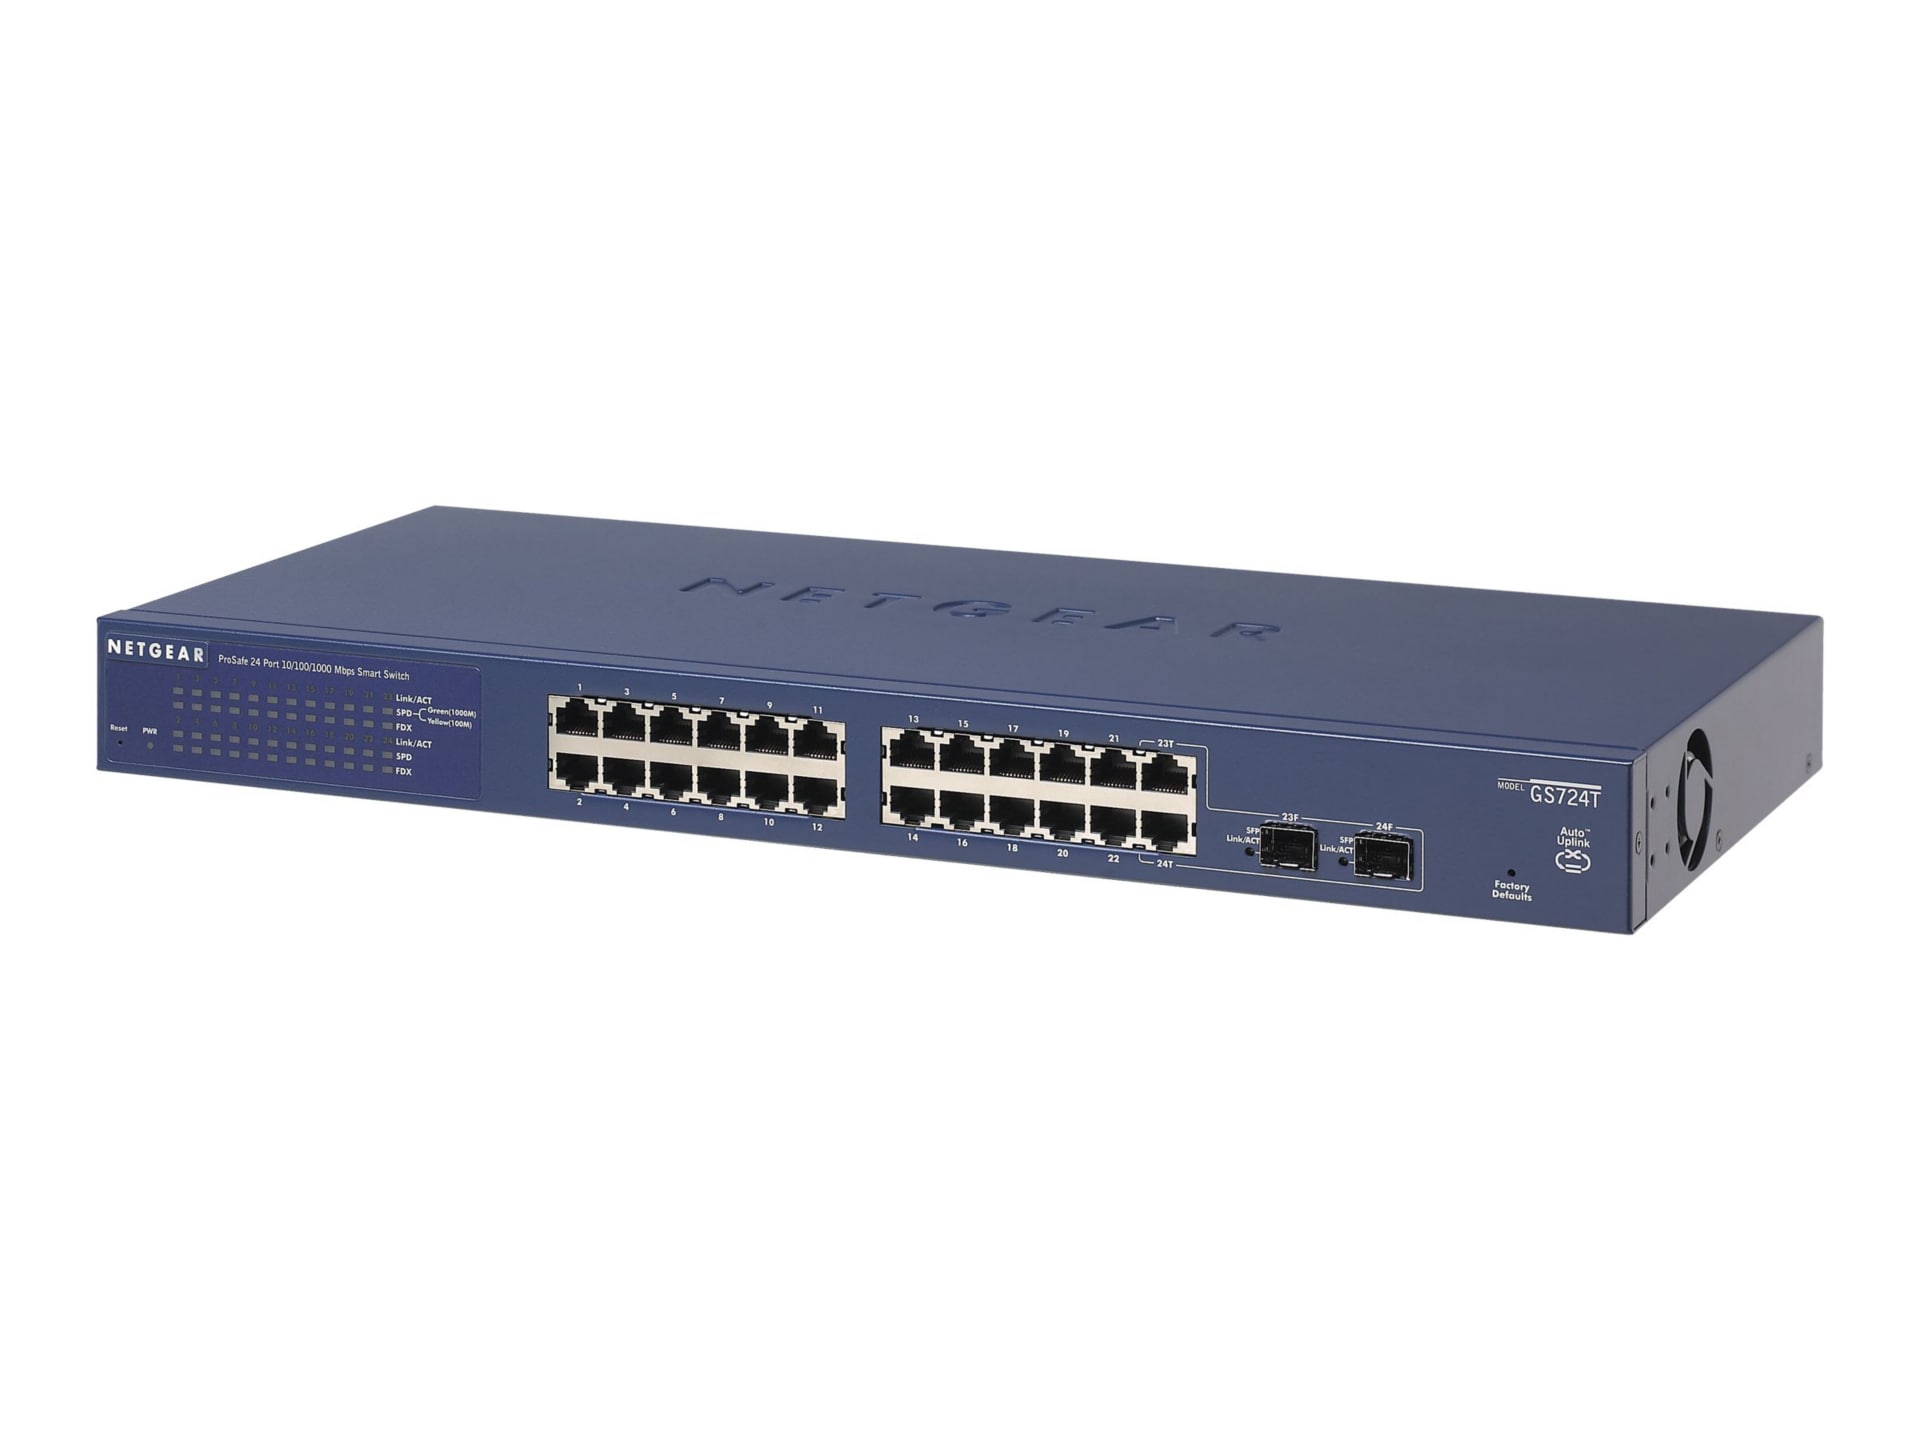 NETGEAR 24-Port Gigabit Smart Switch, GS724Tv4 - GS724T-400NAS - Ethernet  Switches